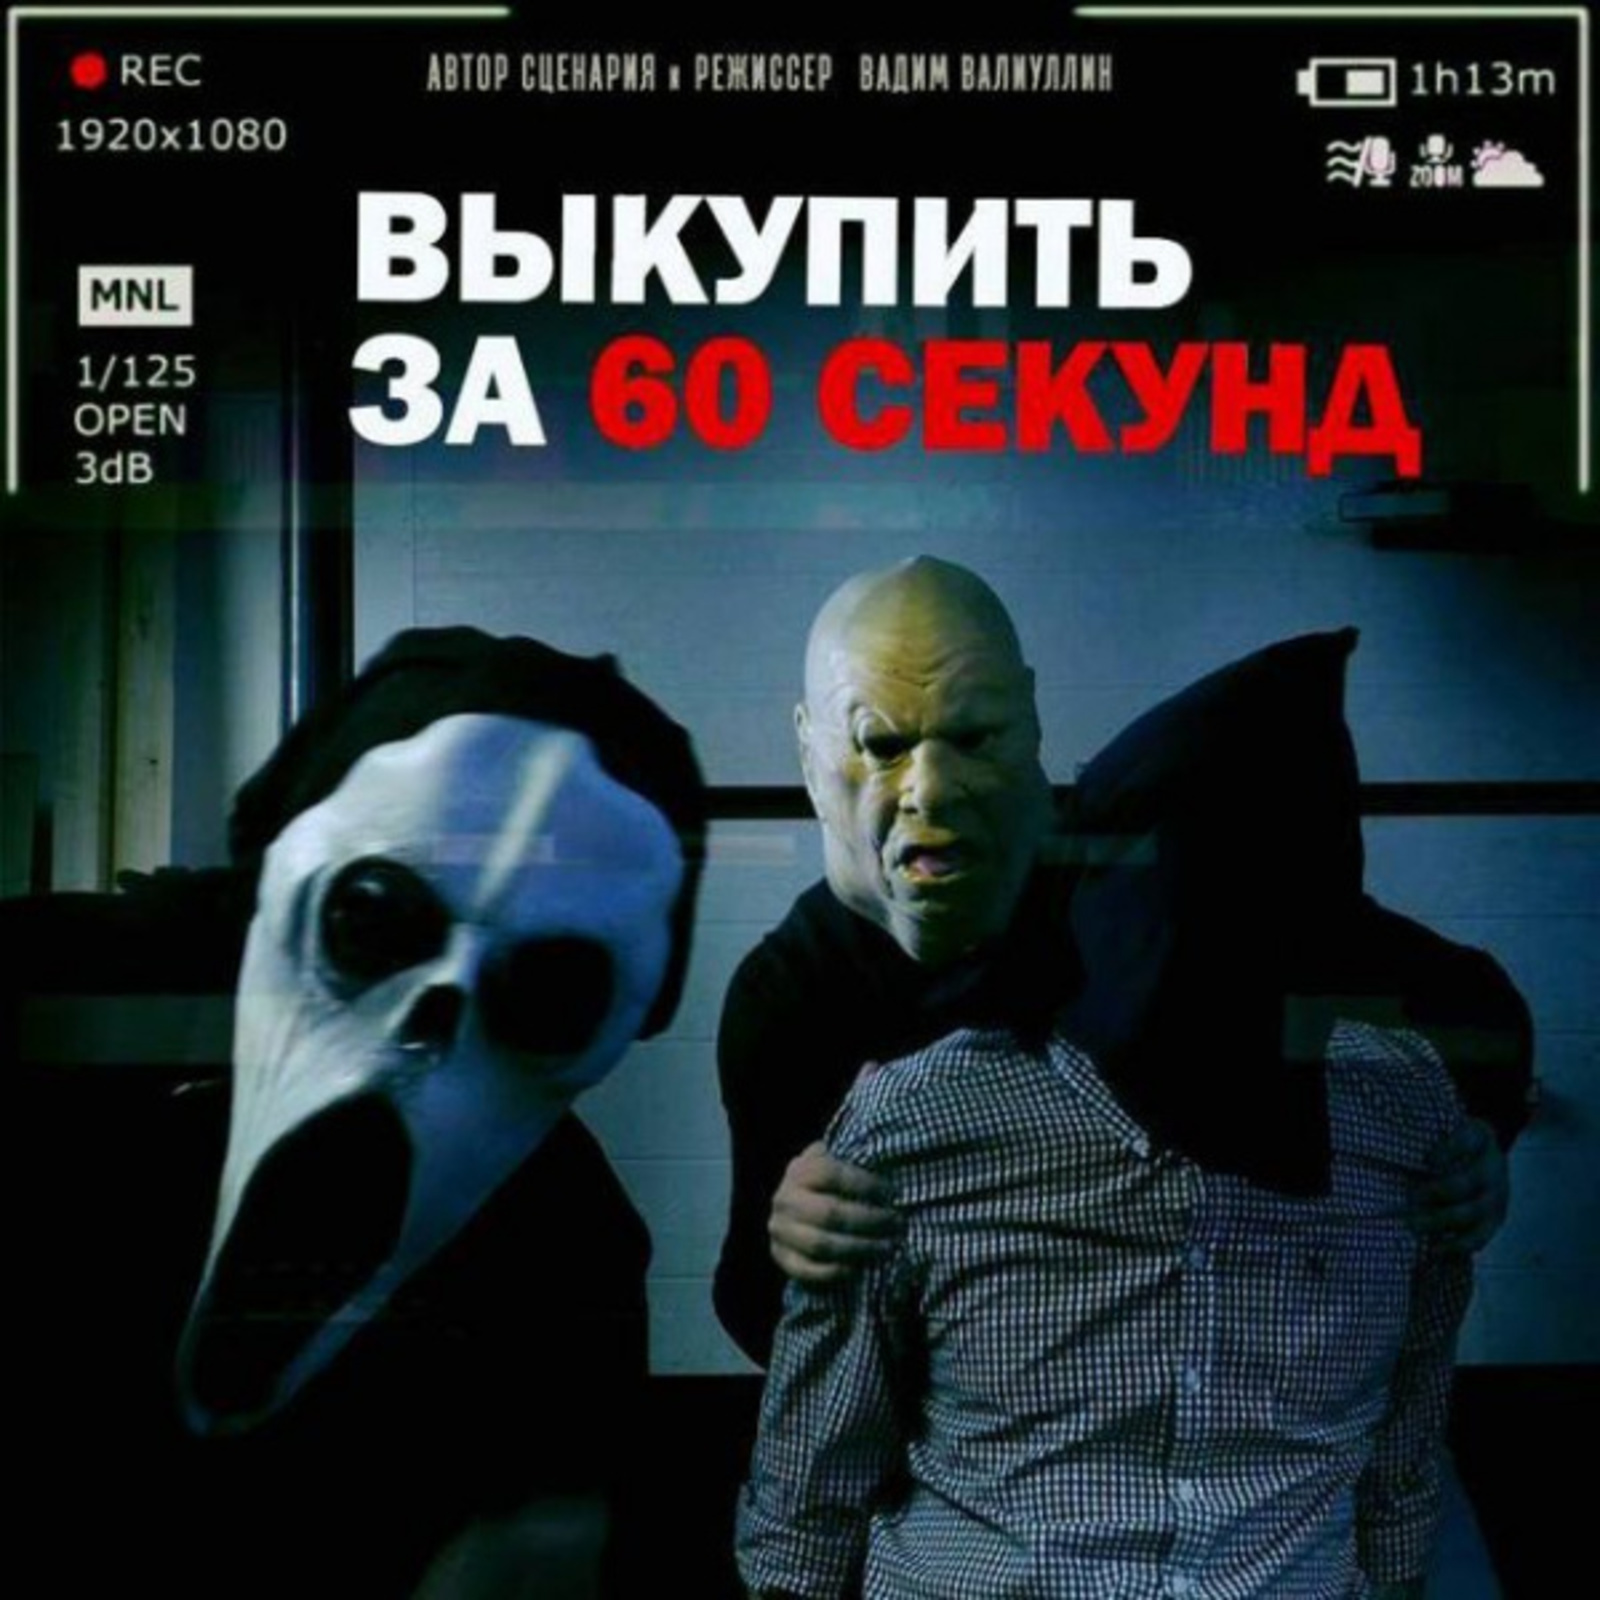 Фото с сайта www.kinomaiak.ru.